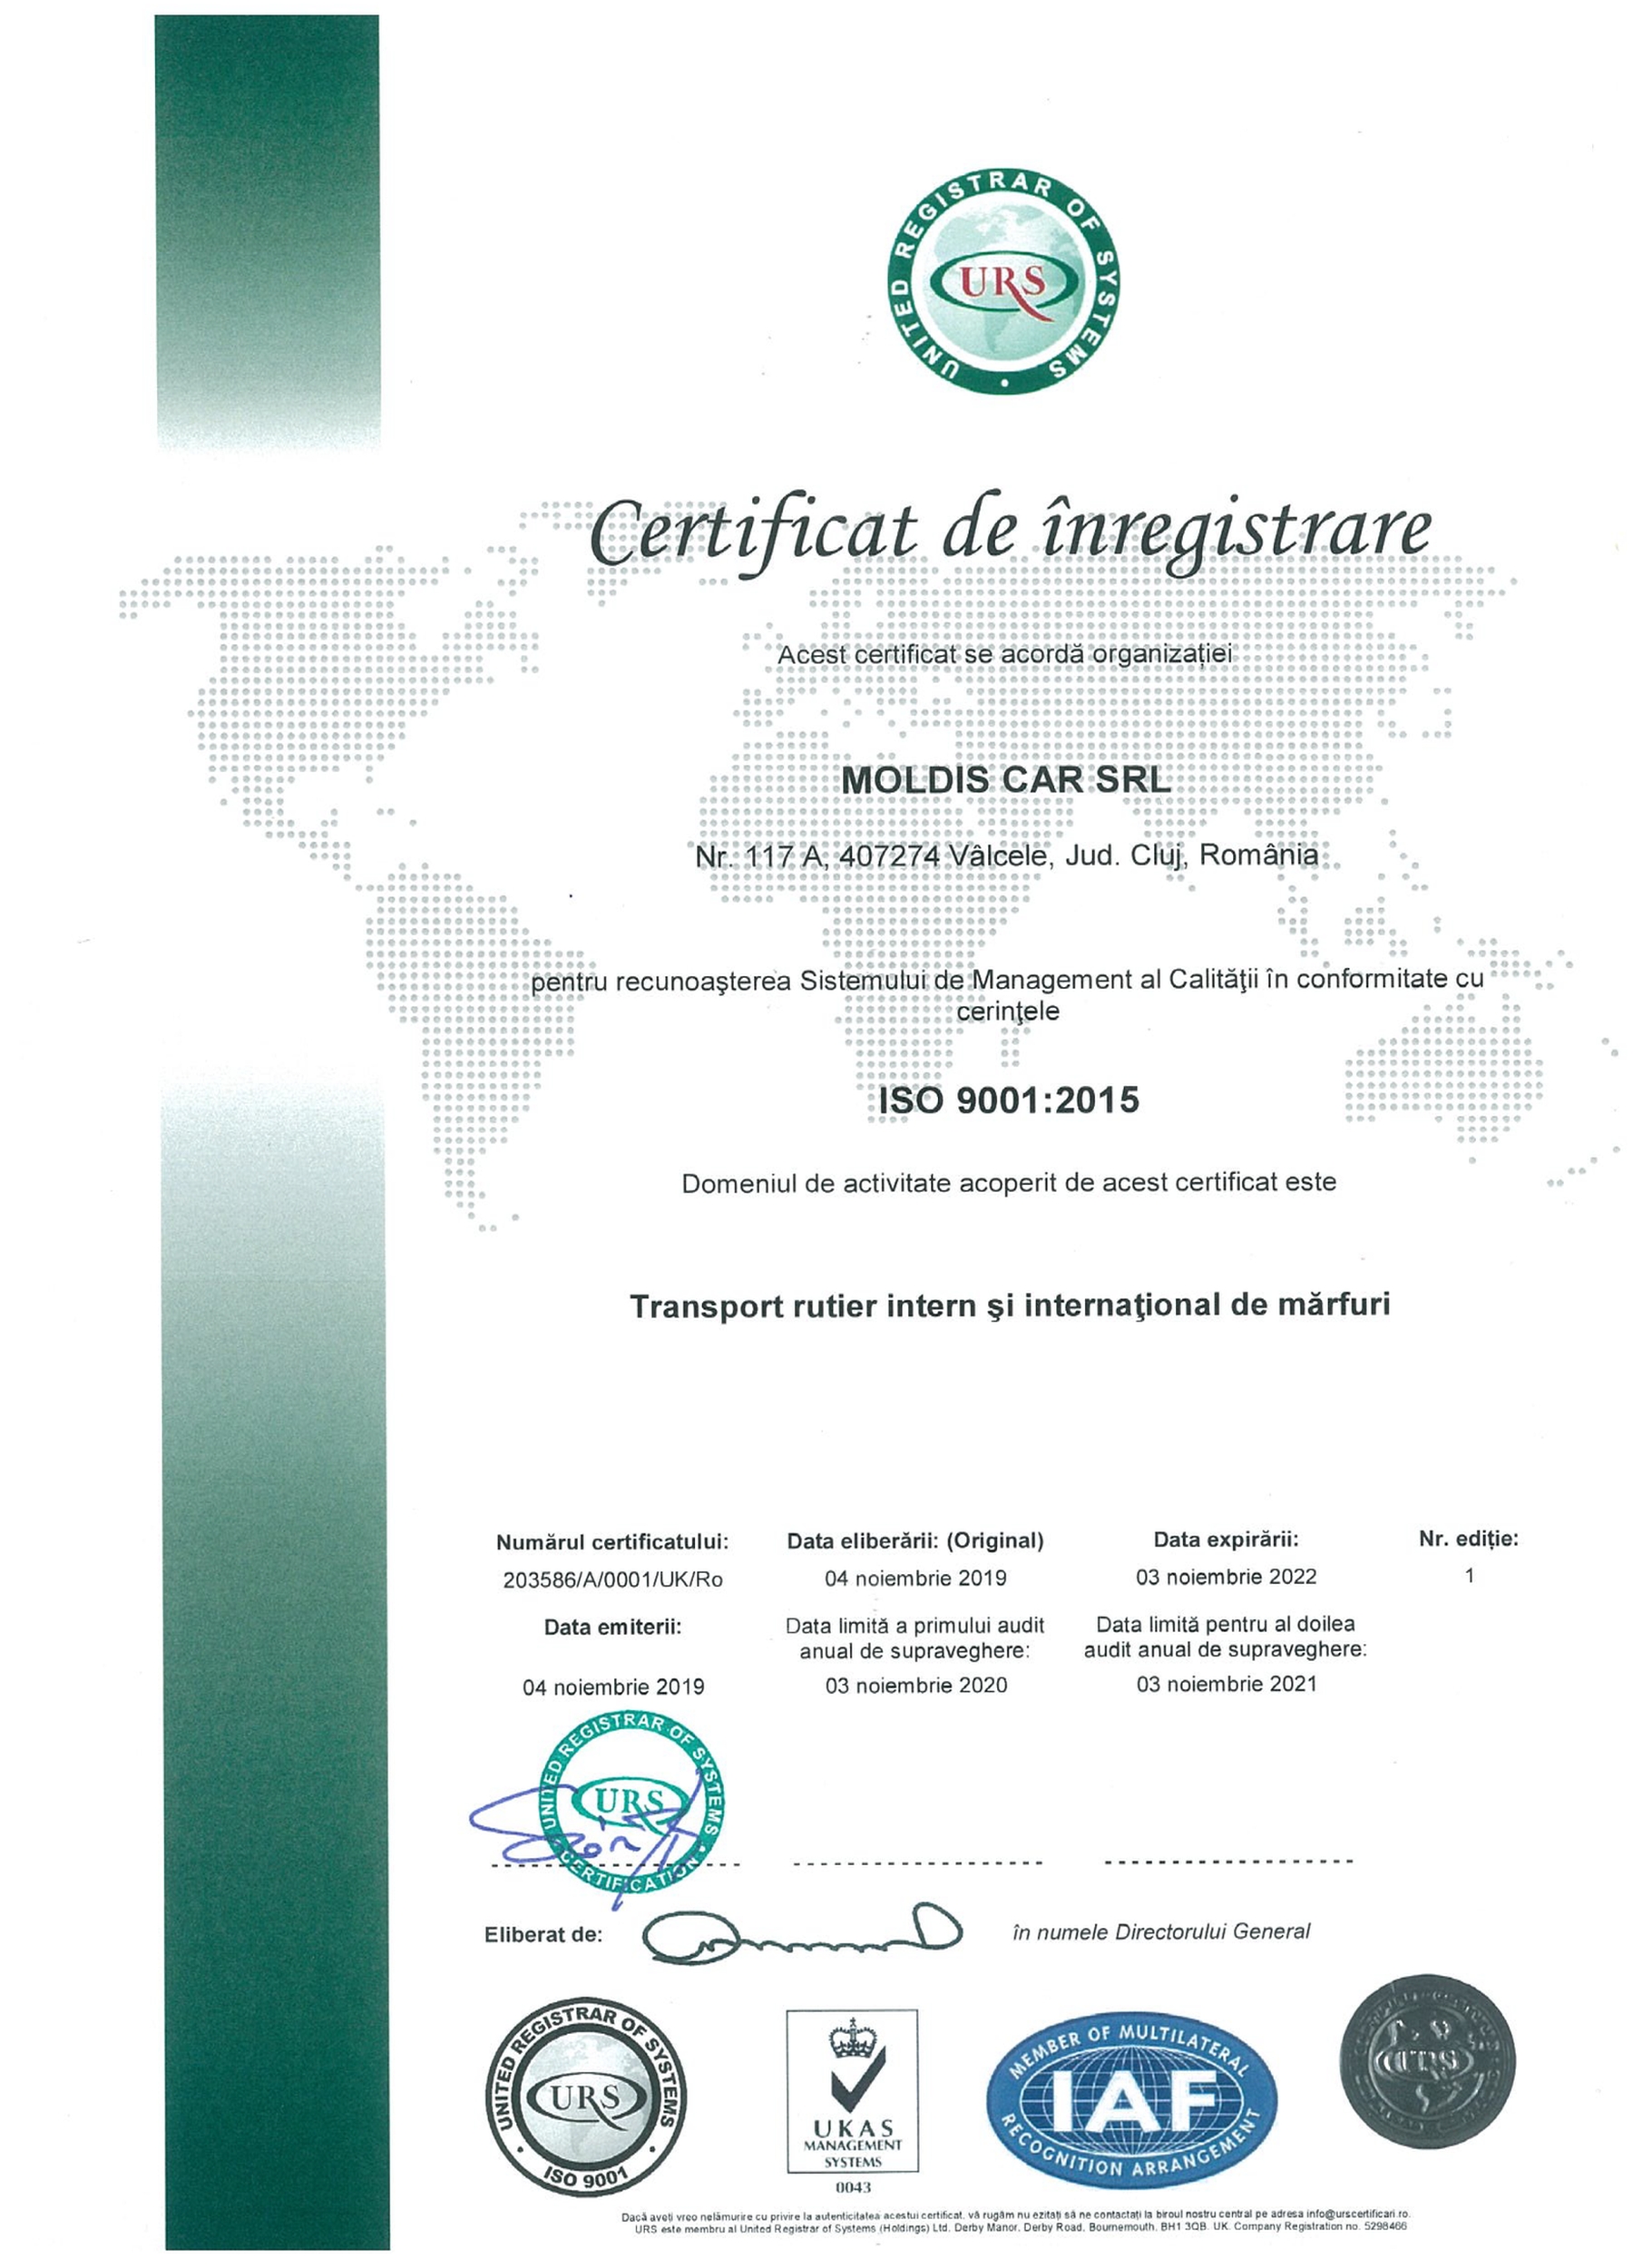 Certificat ISO 9001 2015 MOLDIS CAR SRL